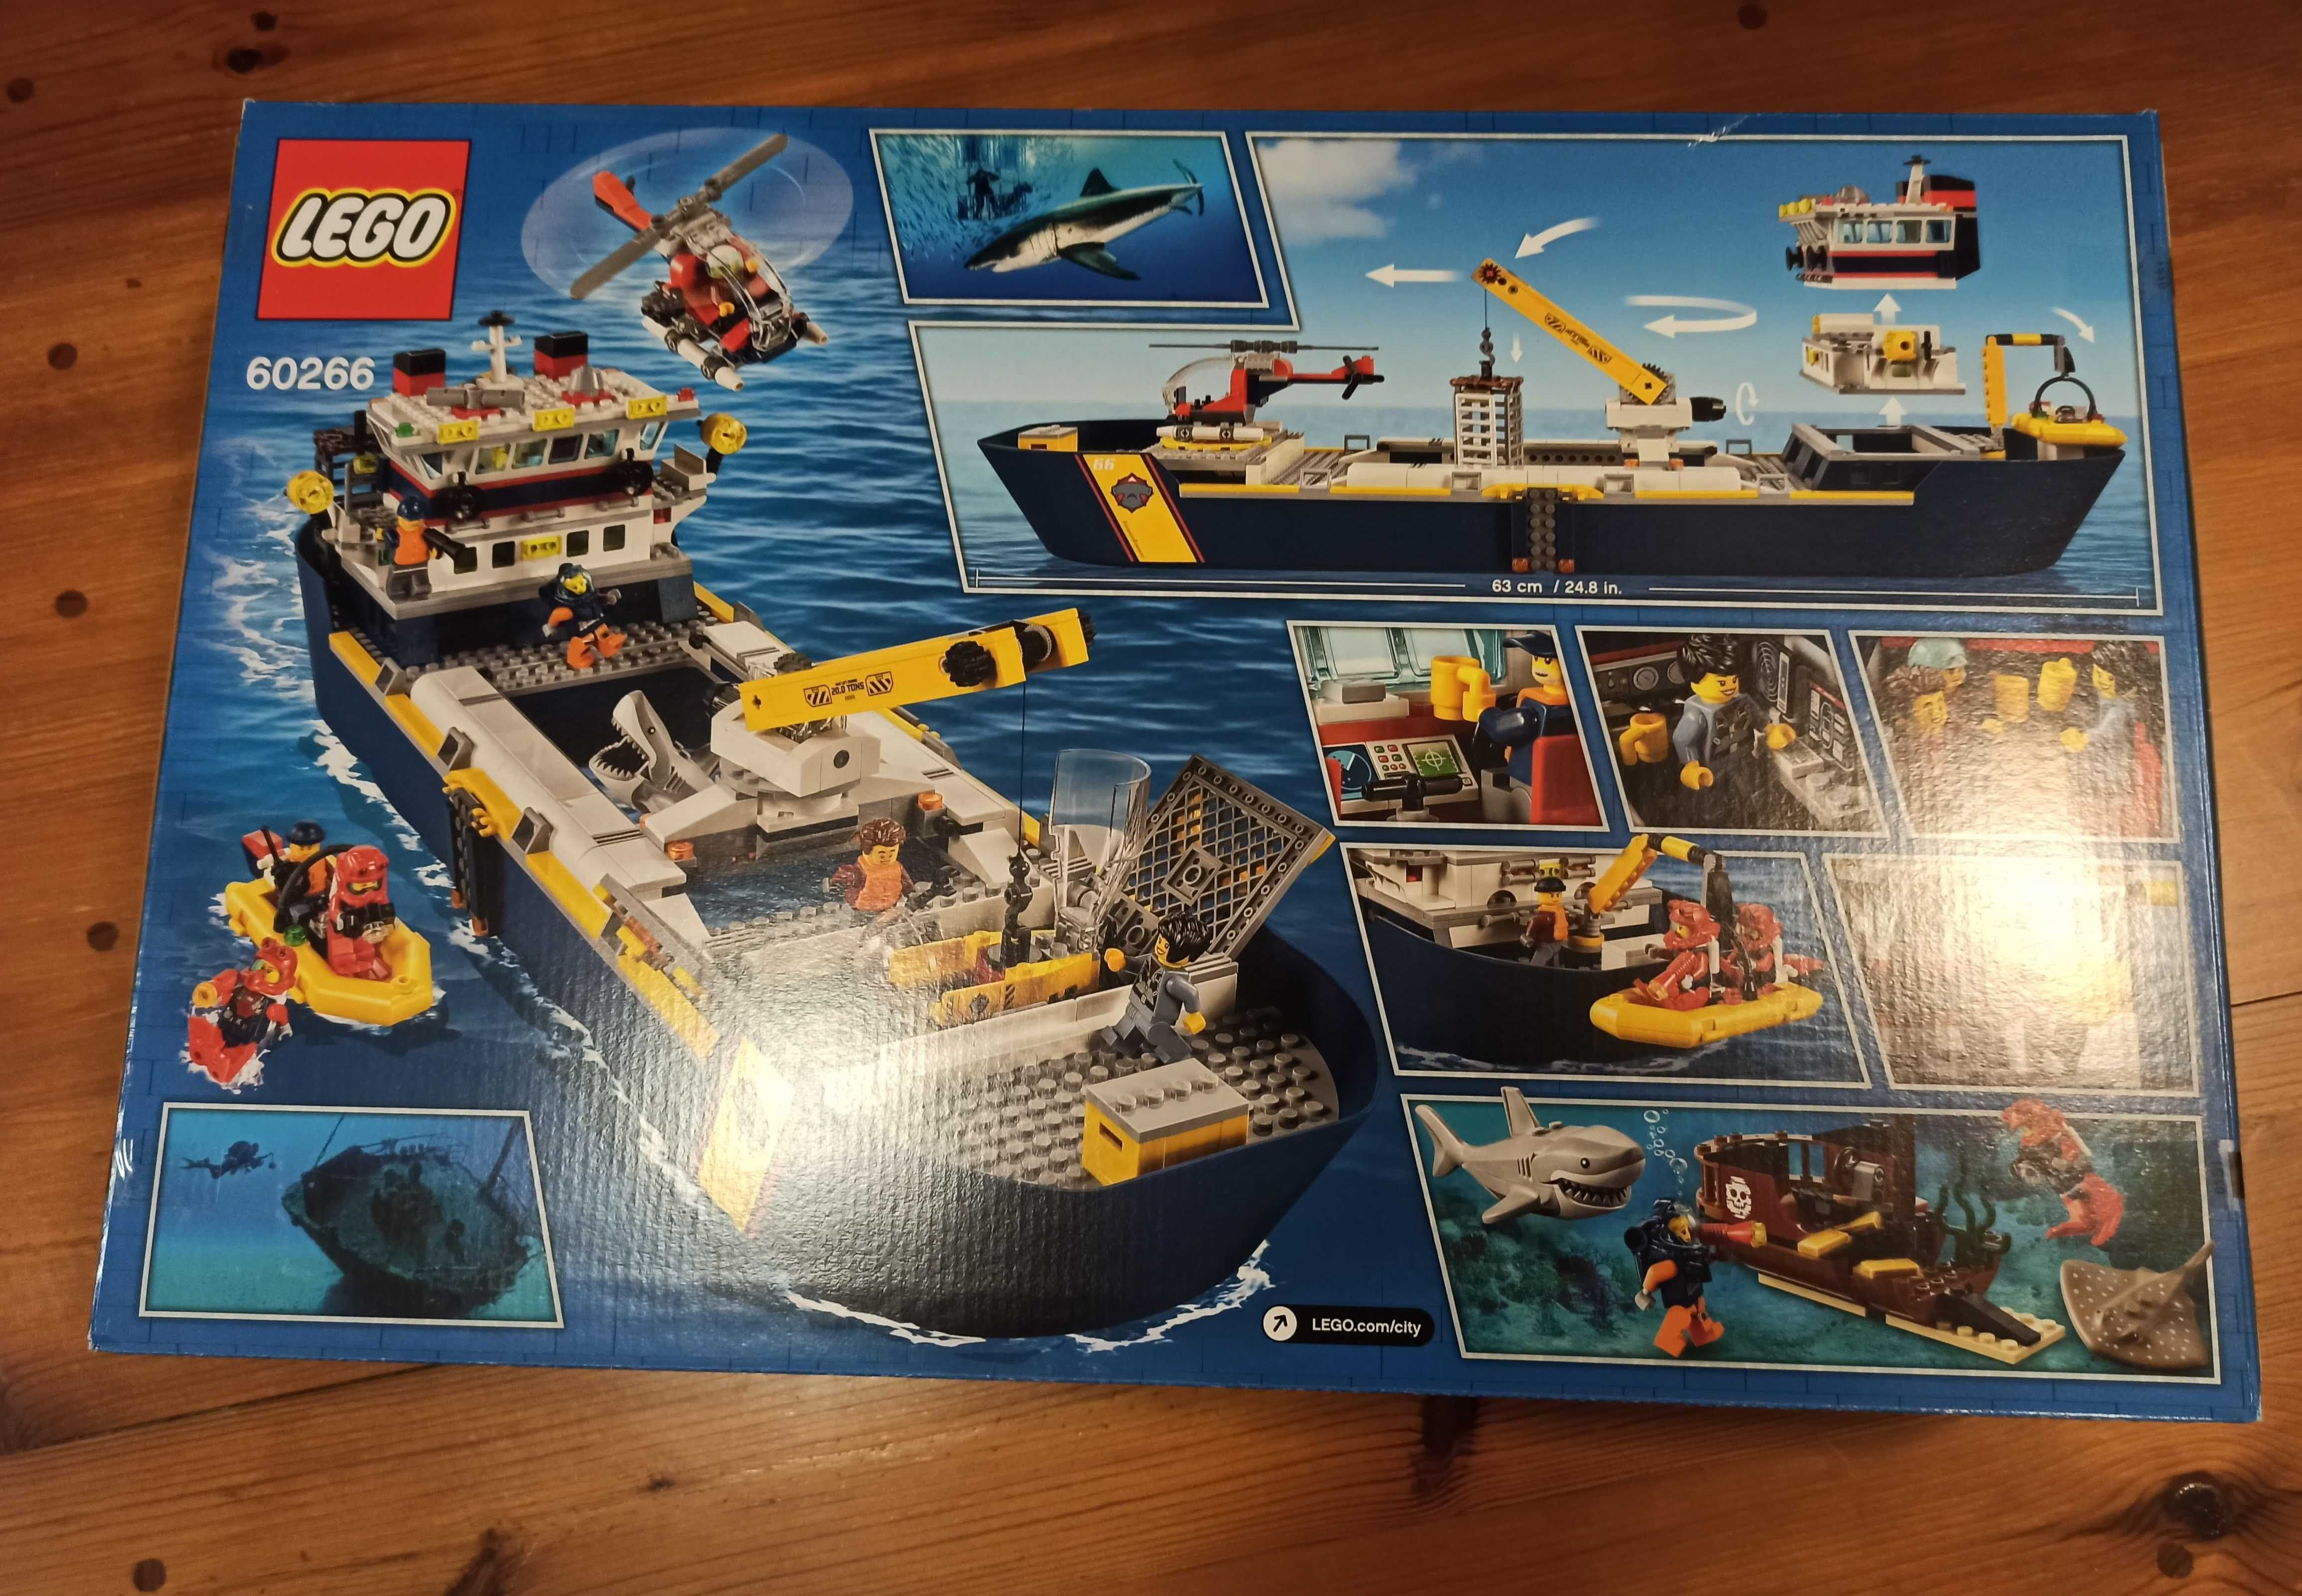 LEGO City 60266 Statek badaczy oceanu